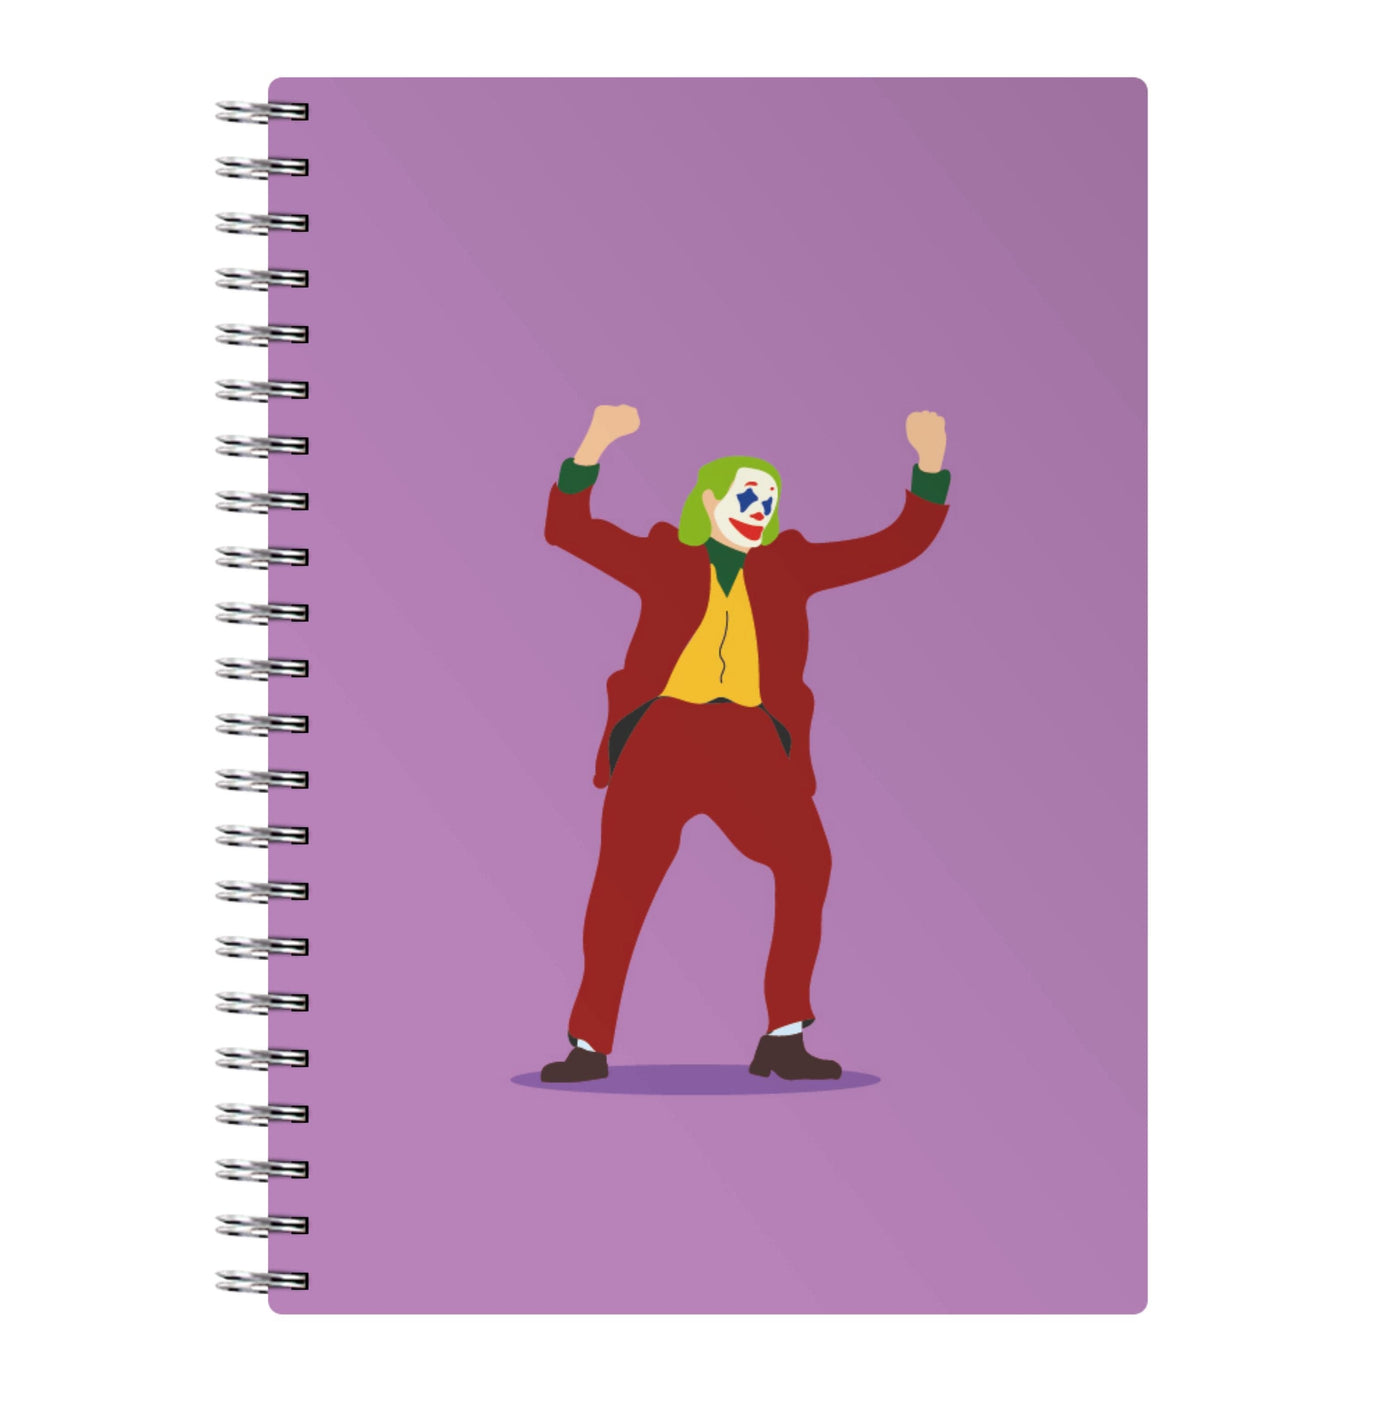 Dancing - Joker Notebook